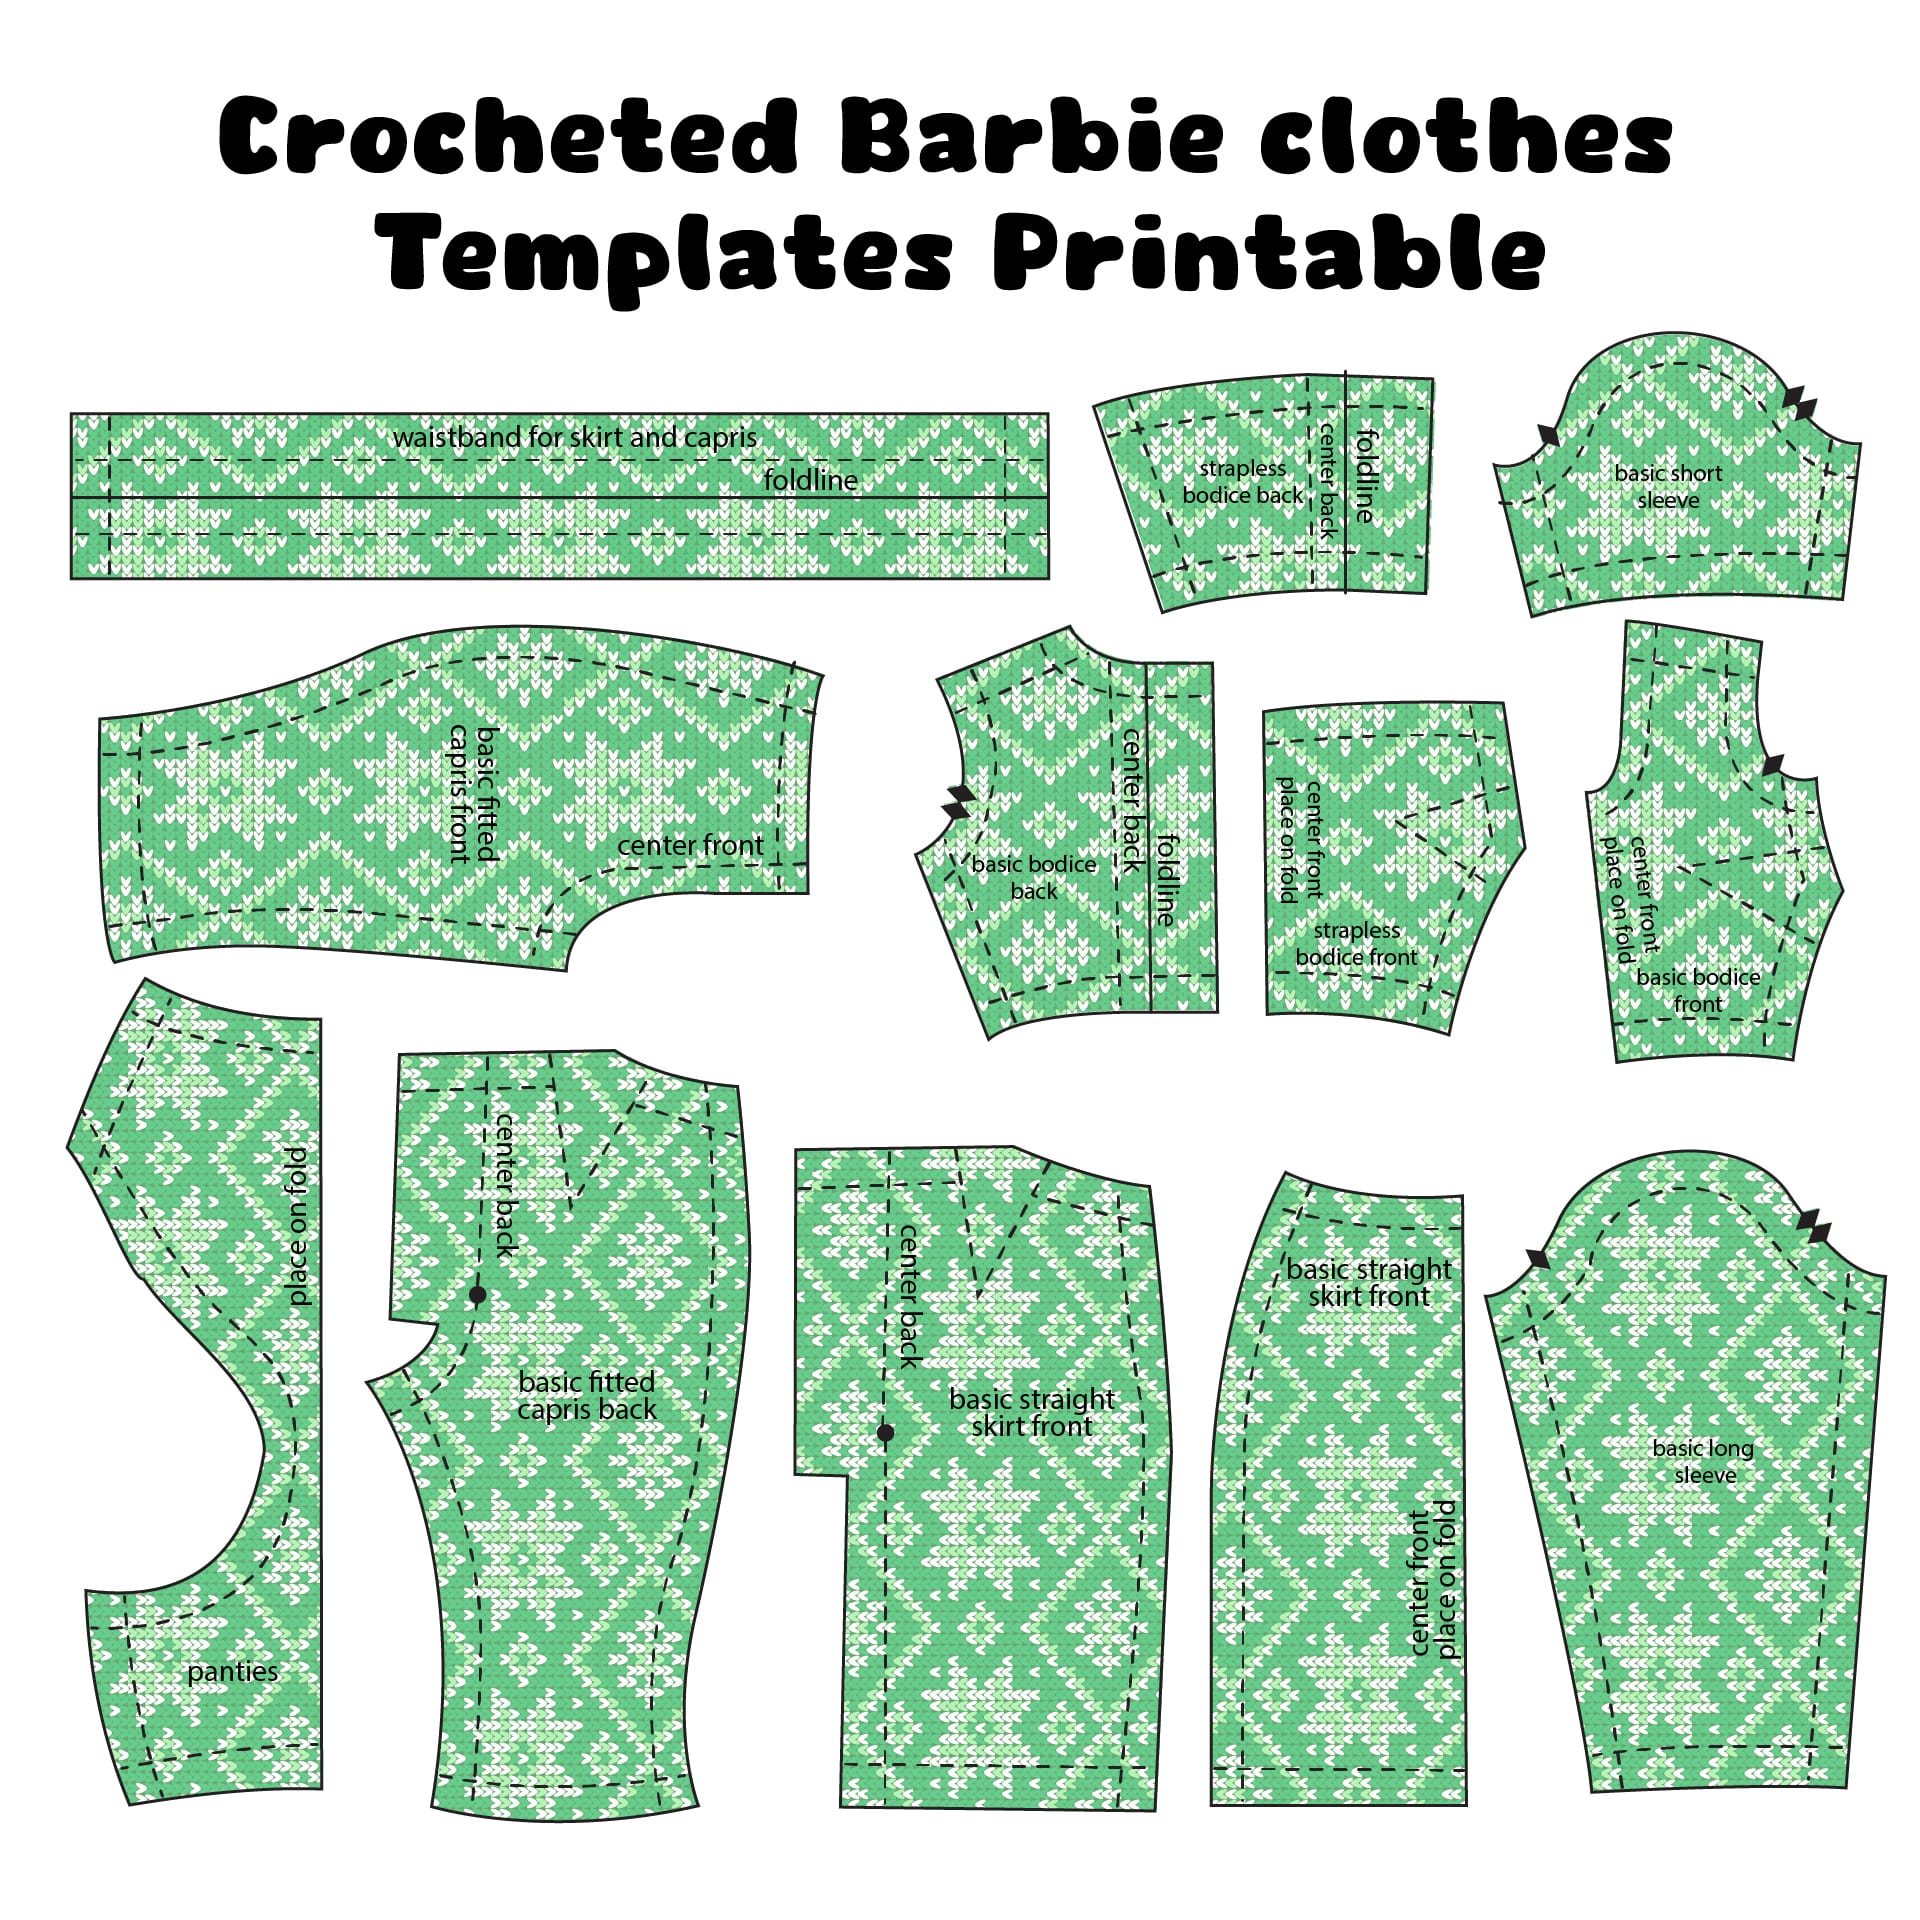 Barbie Clothes Patterns: 45+ Free Designs & Tutorials